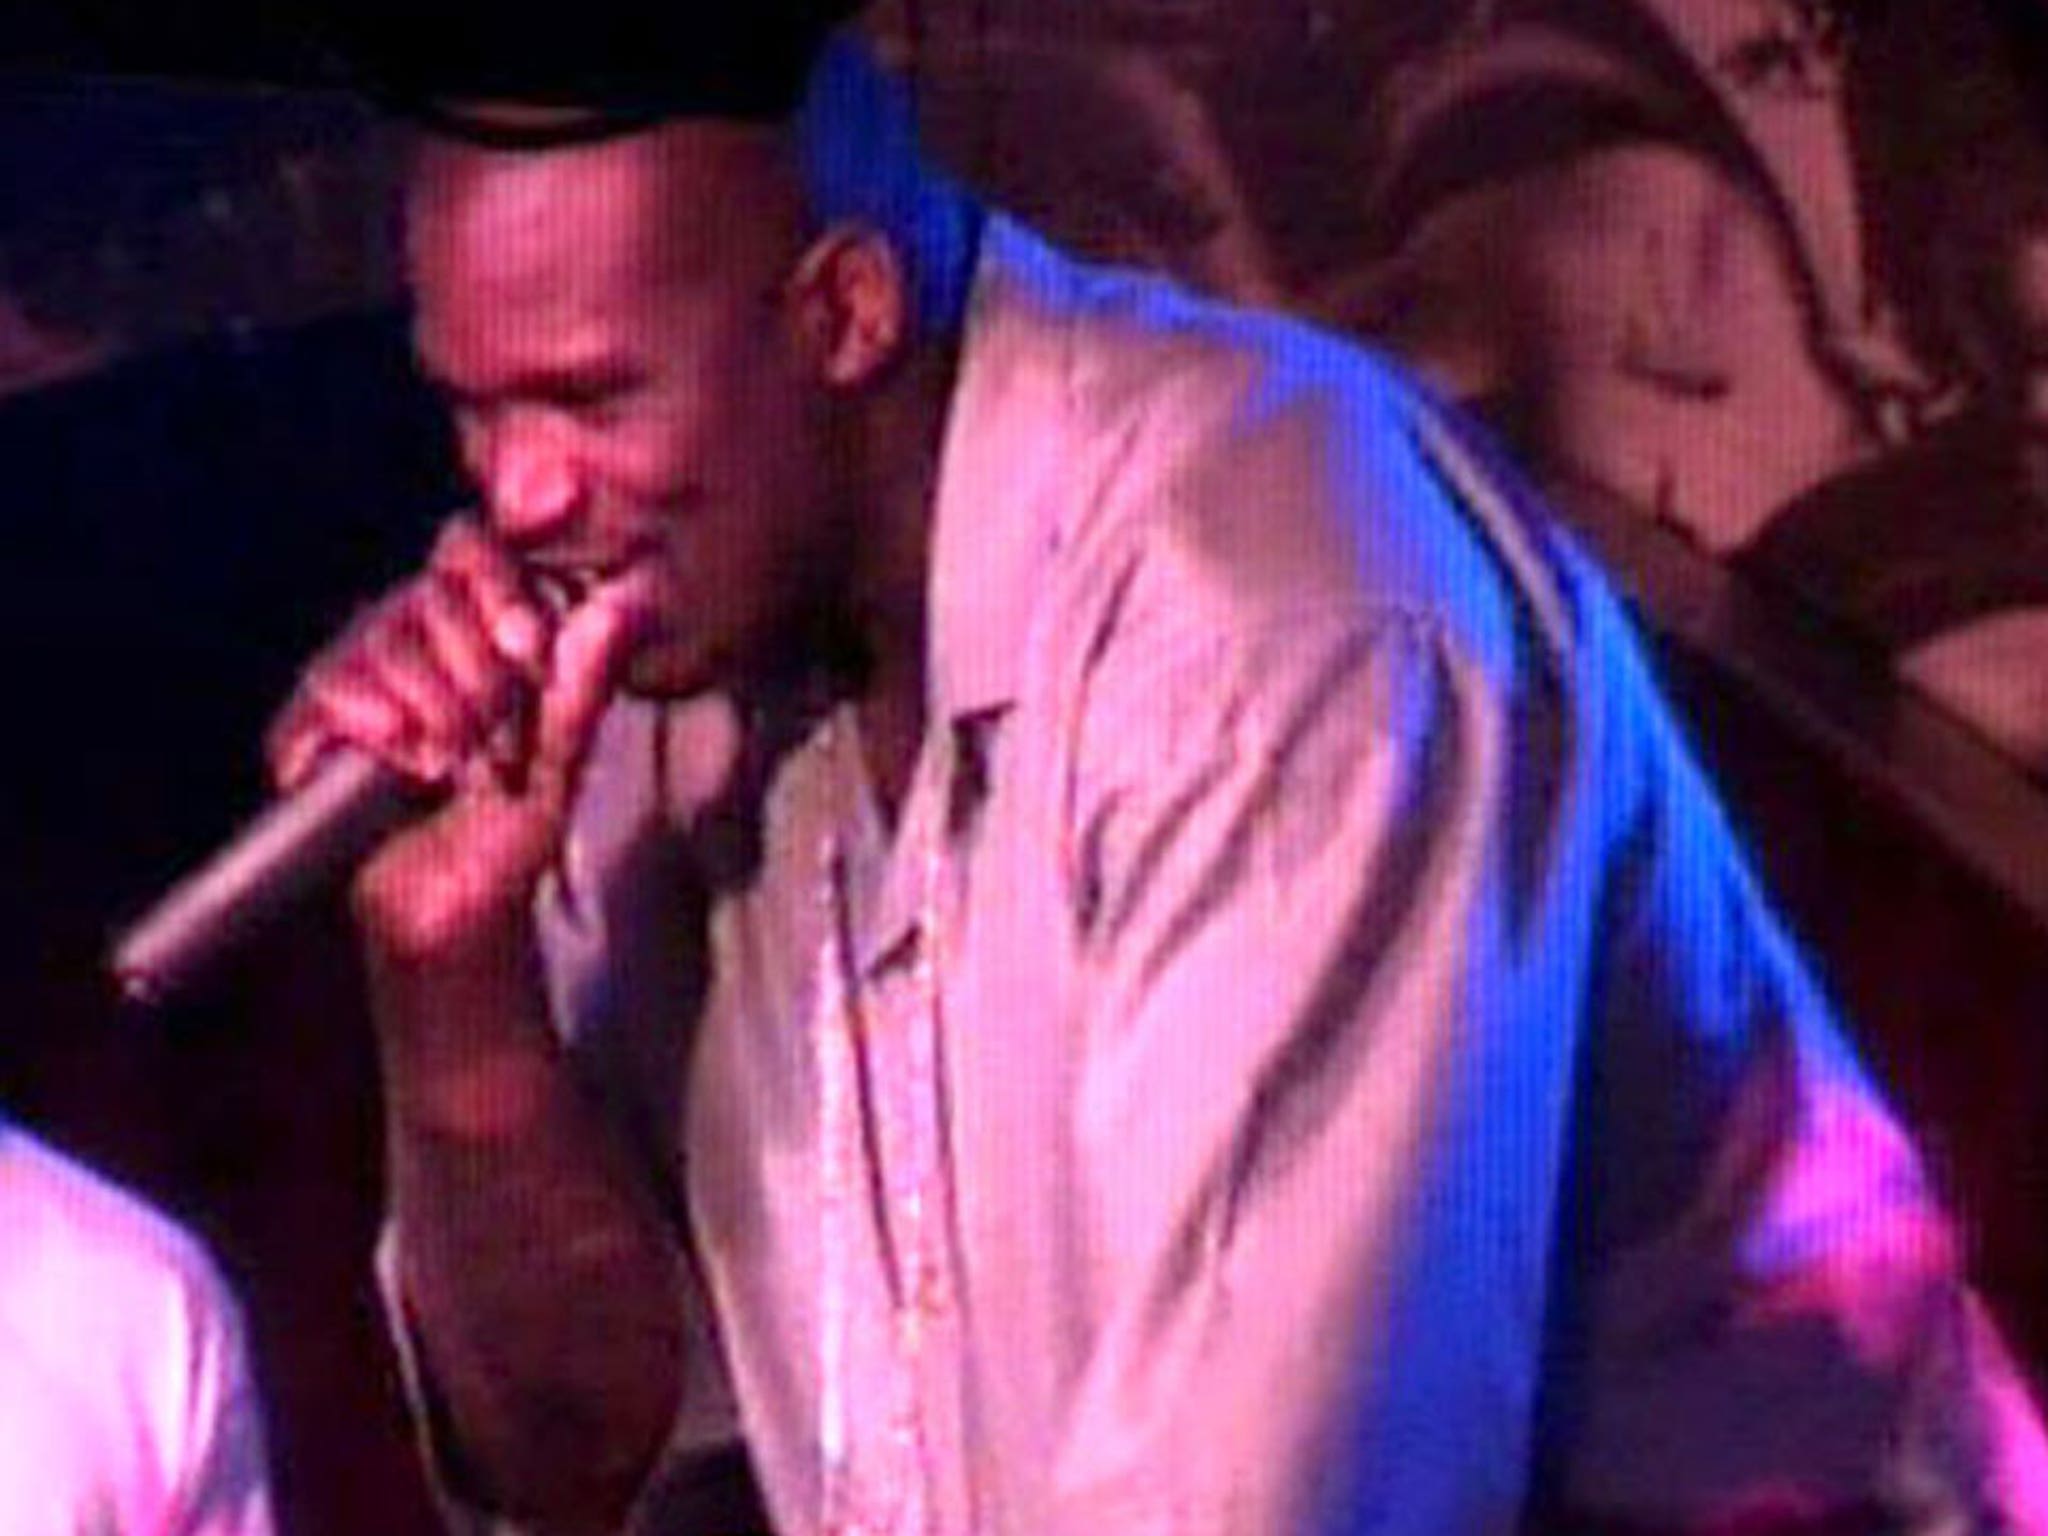 During DJ set, Shaq led a Barkley sucks chant, displayed Barkley has no  rings